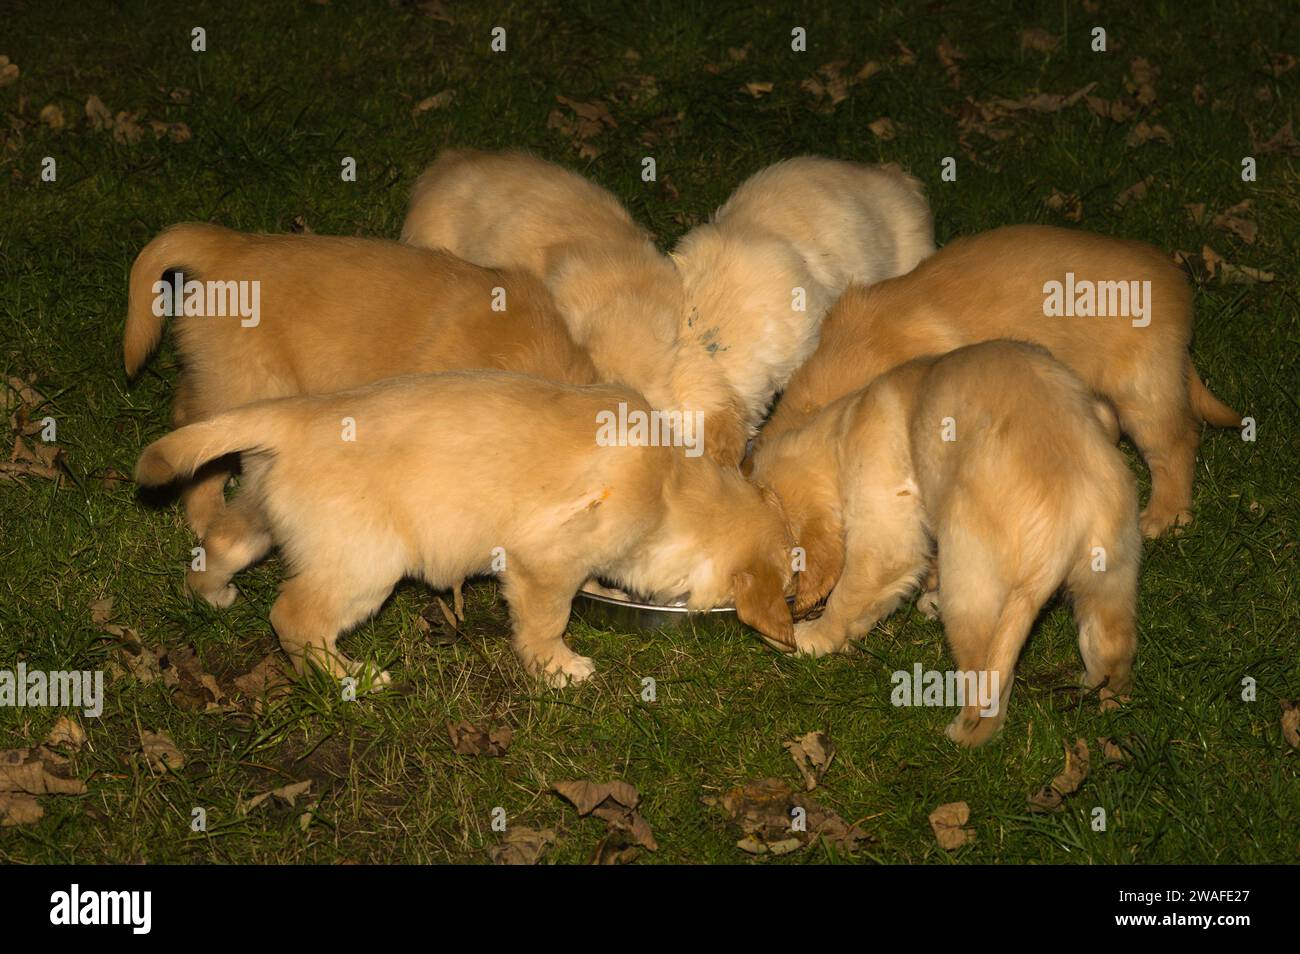 Six golden retriever puppies enjoy an evening feed from a communal metal bowl on the grass Stock Photo